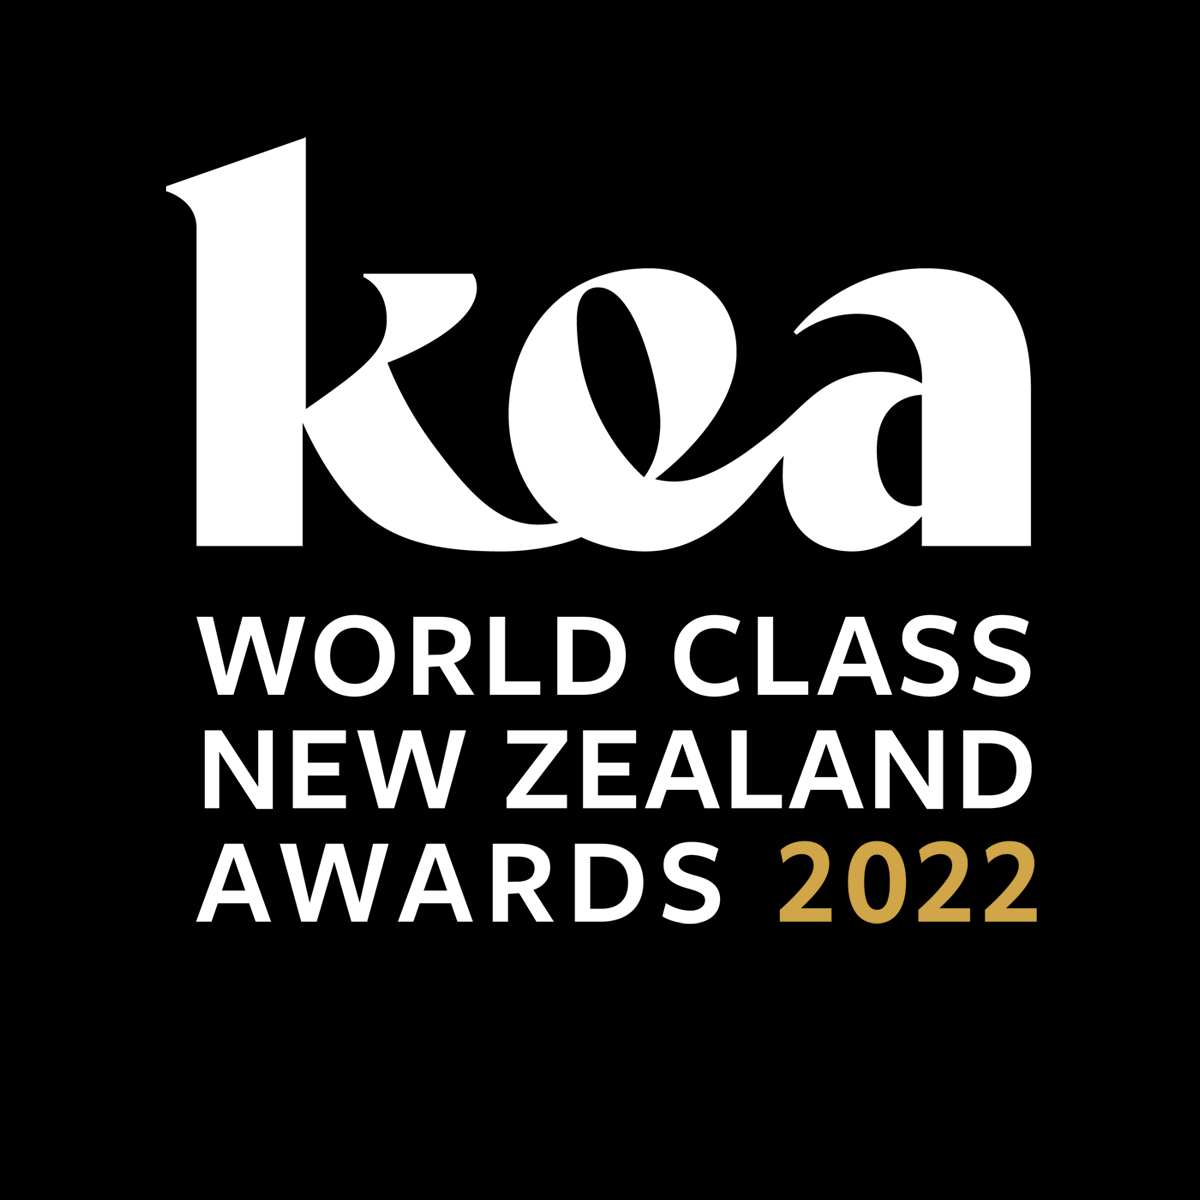 Kea World Class New Zealand Awards Breakfast London